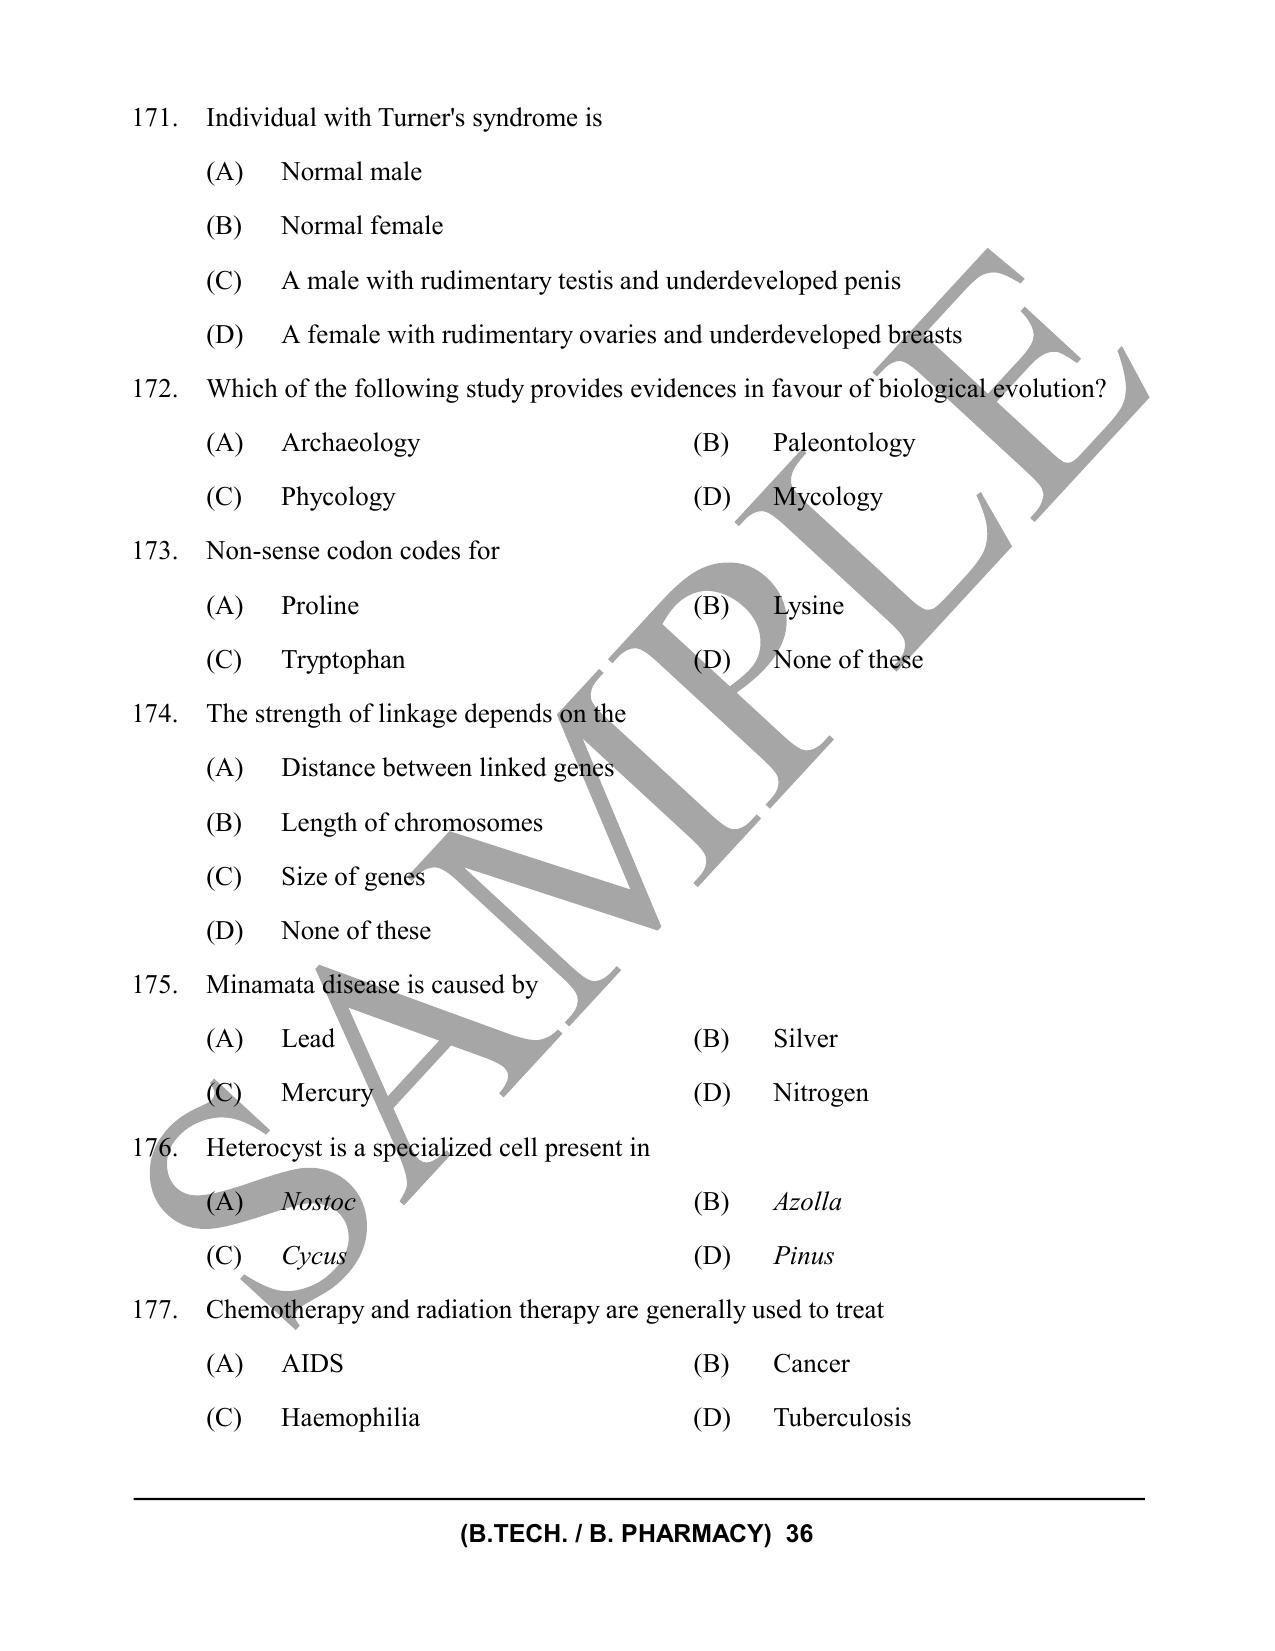 HPCET B. Tech. and B. Pharm. 2023 Sample Paper - Page 36